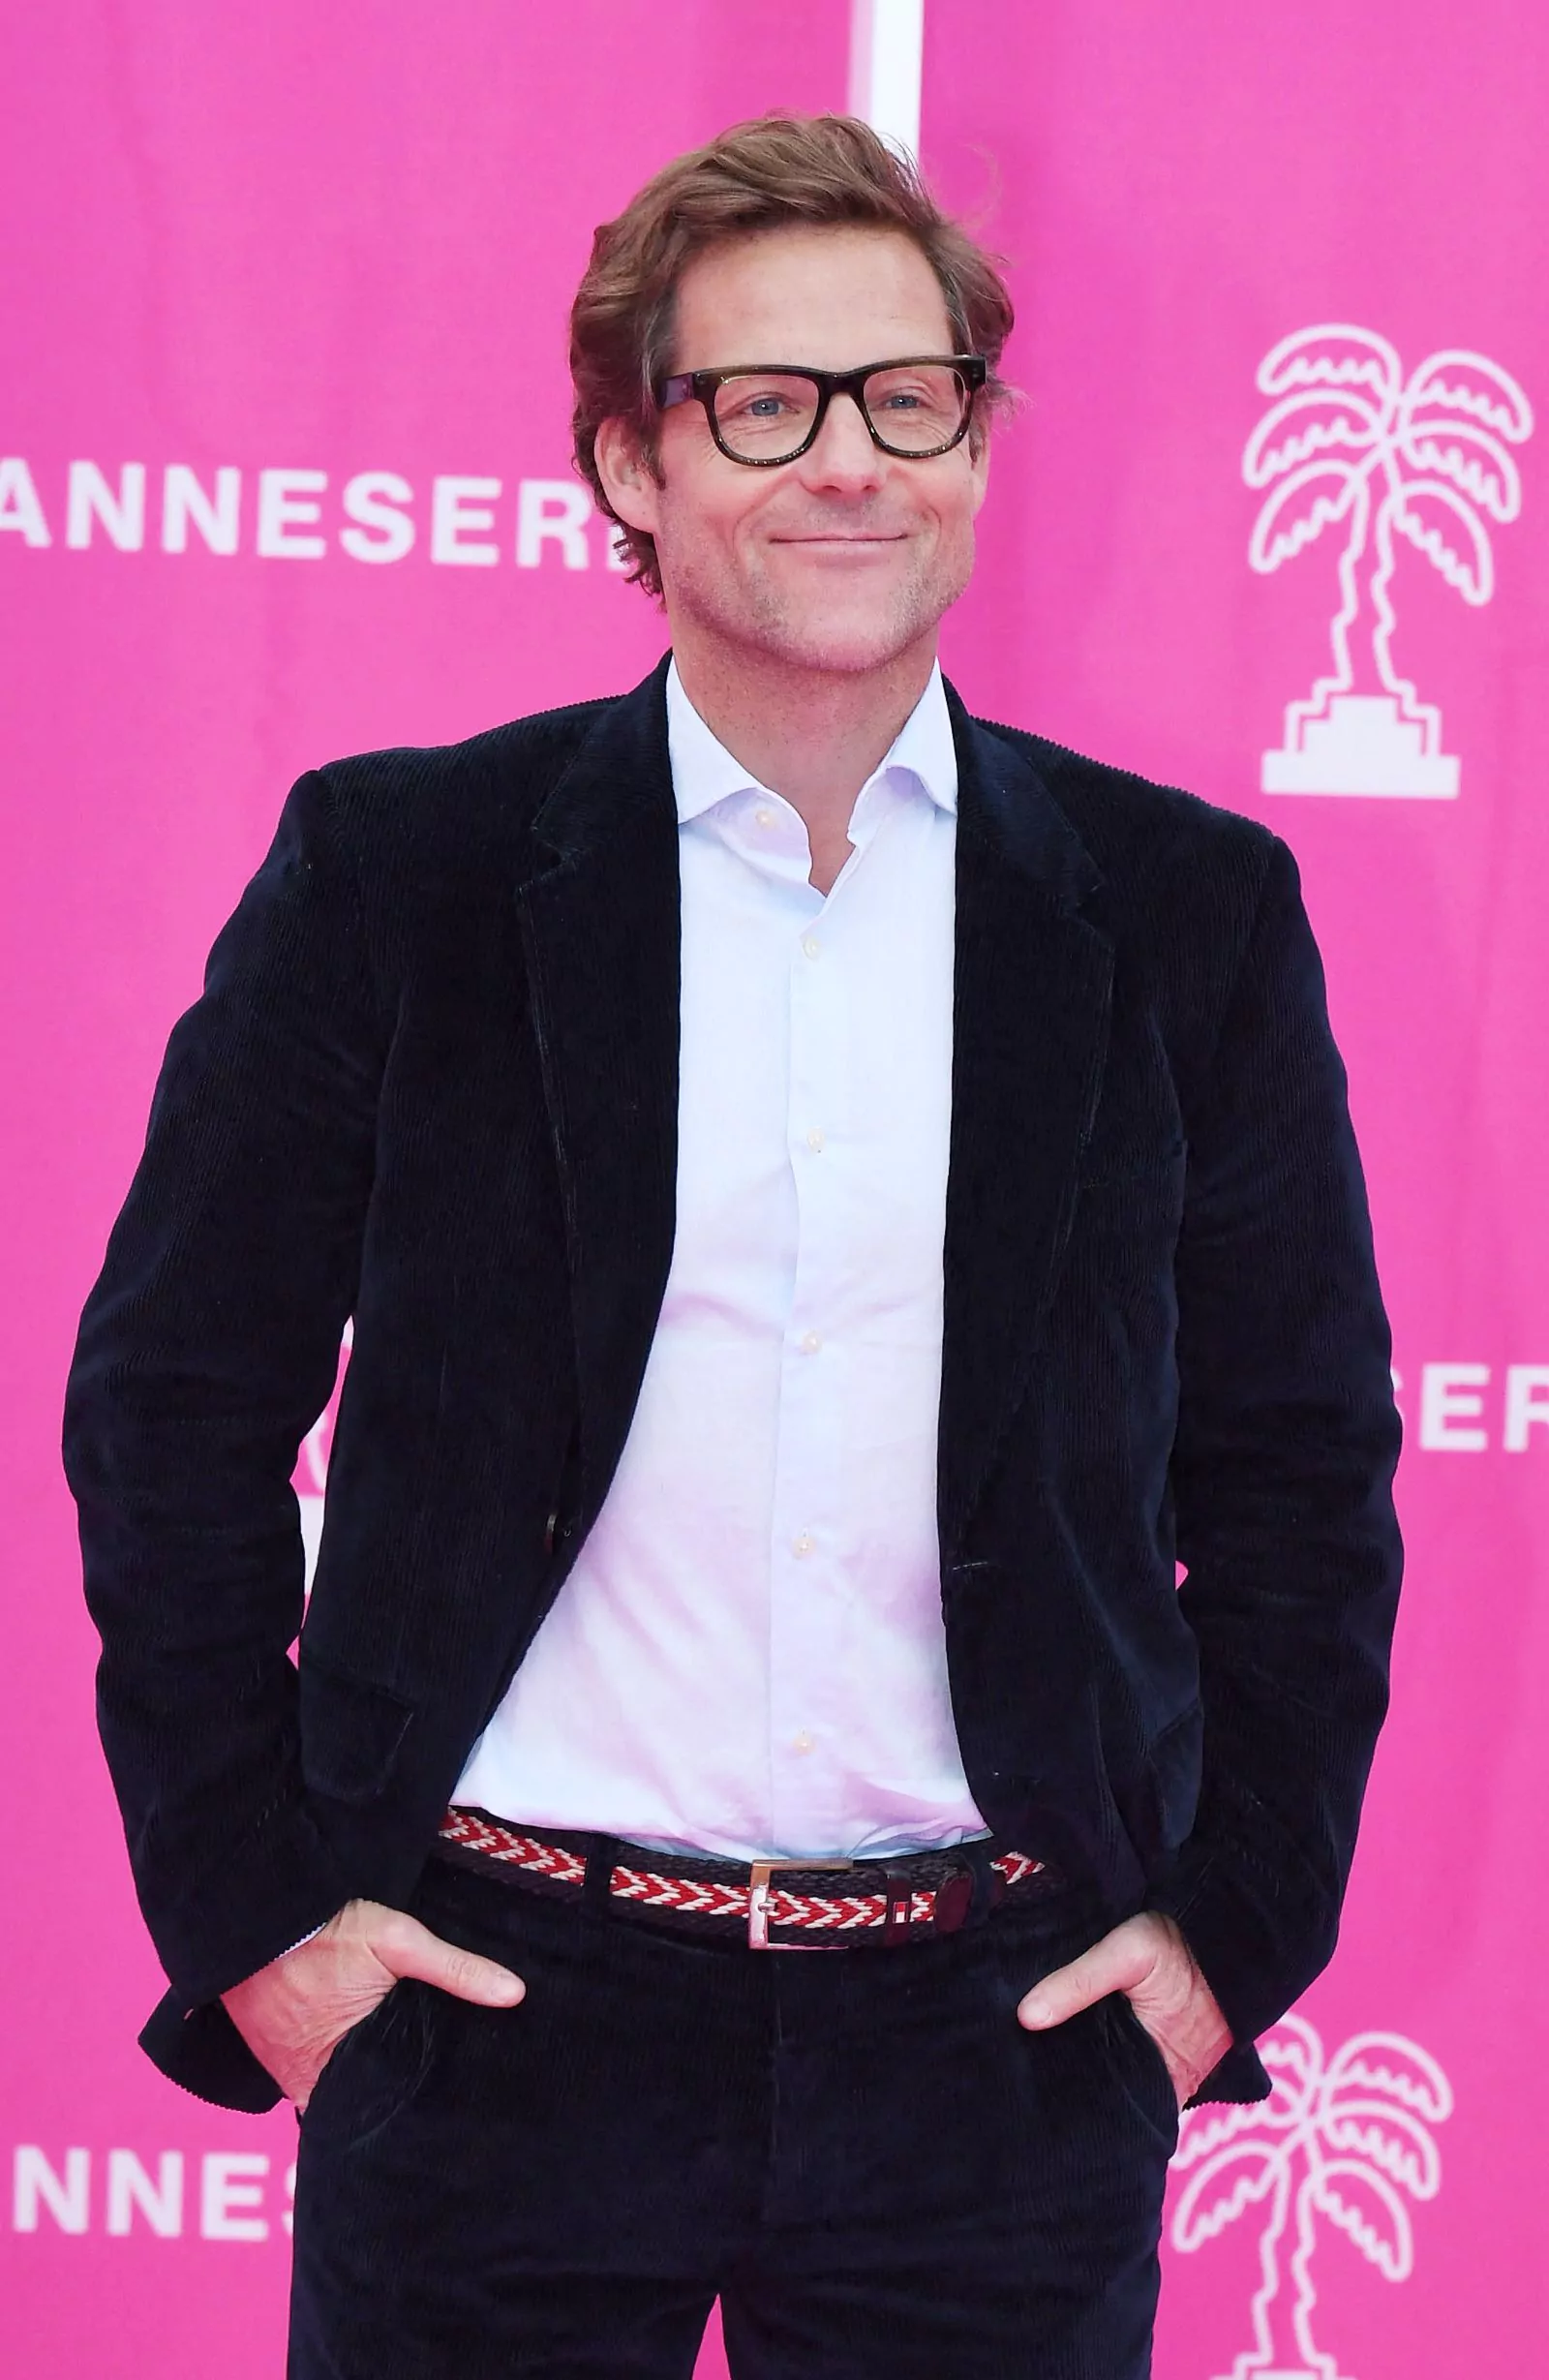 Джейми Бамбер на 6-м международном фестивале сериалов Canneseries 2023 в Каннах, 14 апреля 2023 г.